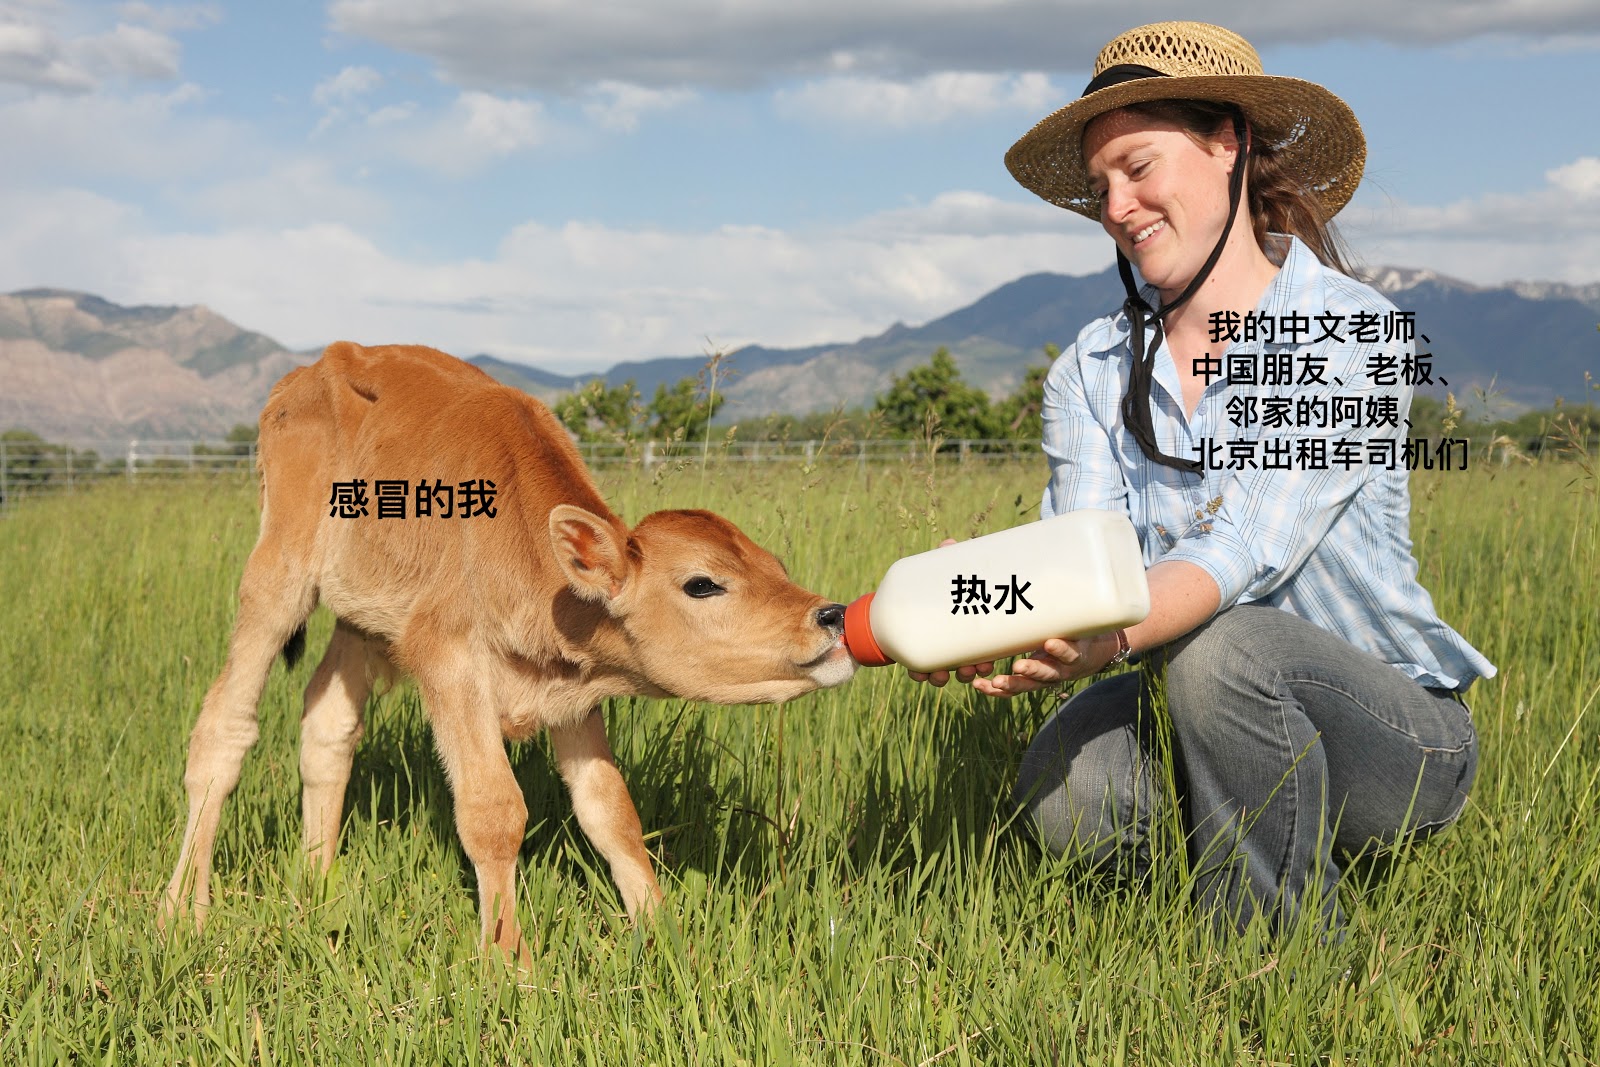 Image of woman bottle feeding a calf.